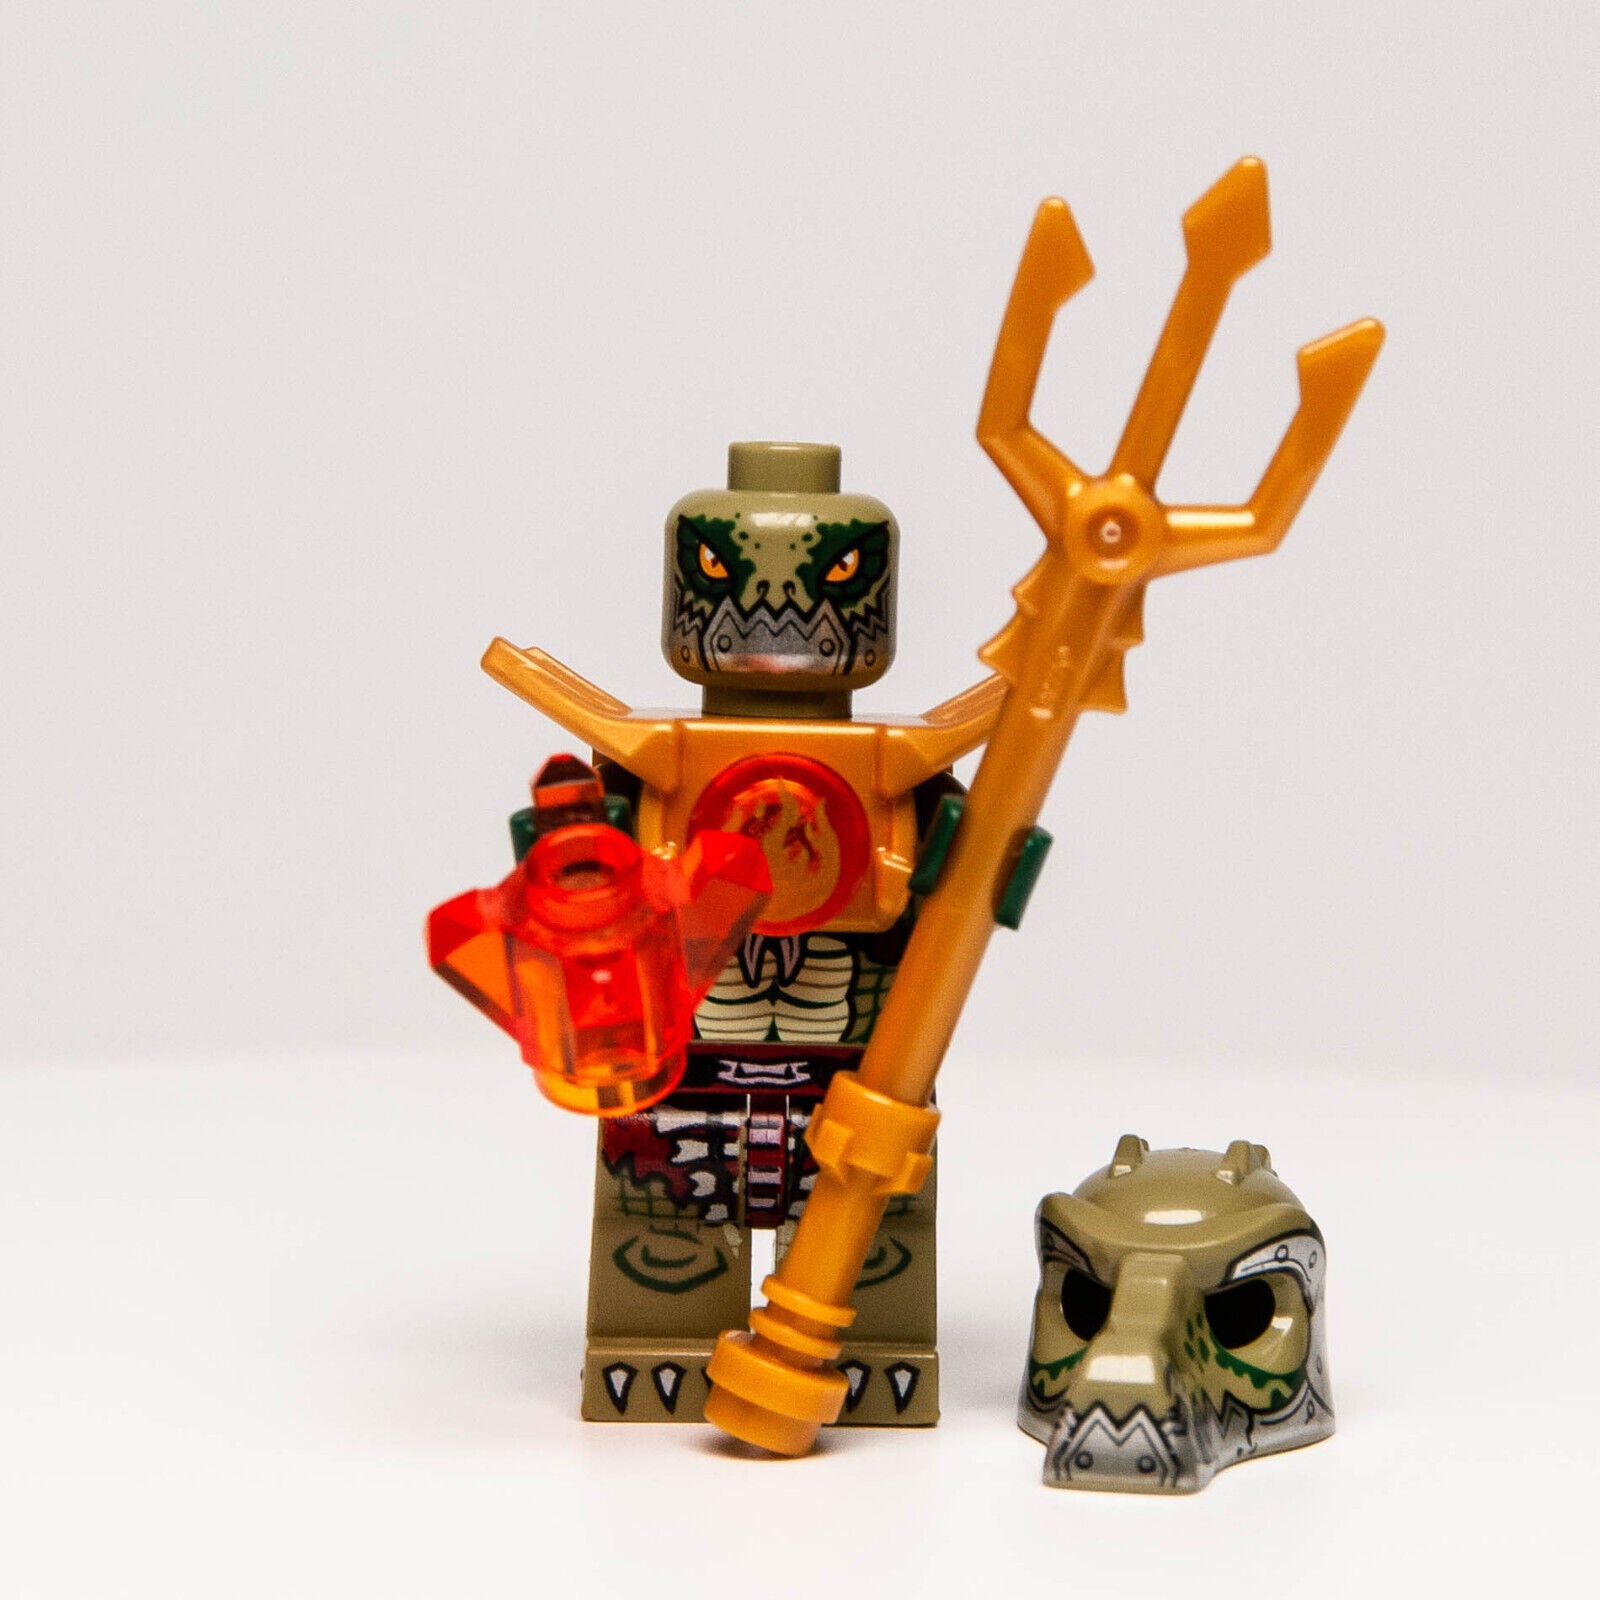 LEGO Legends of Chima Crocodile Tribe Minifigure - Crokenburg (loc121) 70231